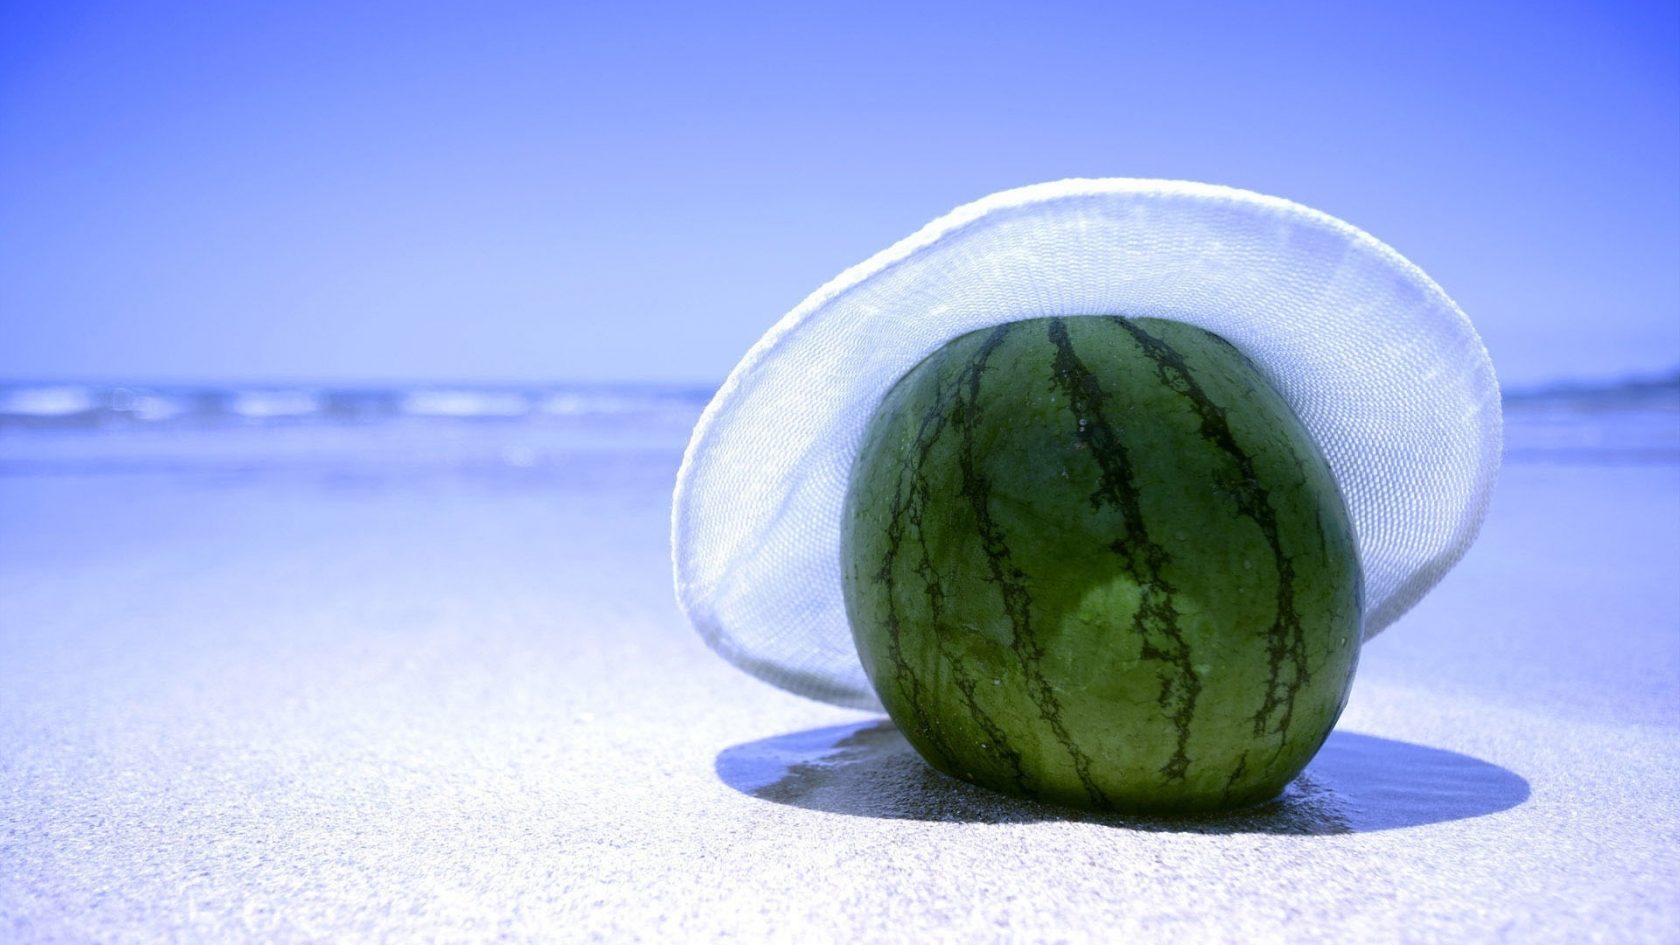 Watermelon on the beach for 1680 x 945 HDTV resolution